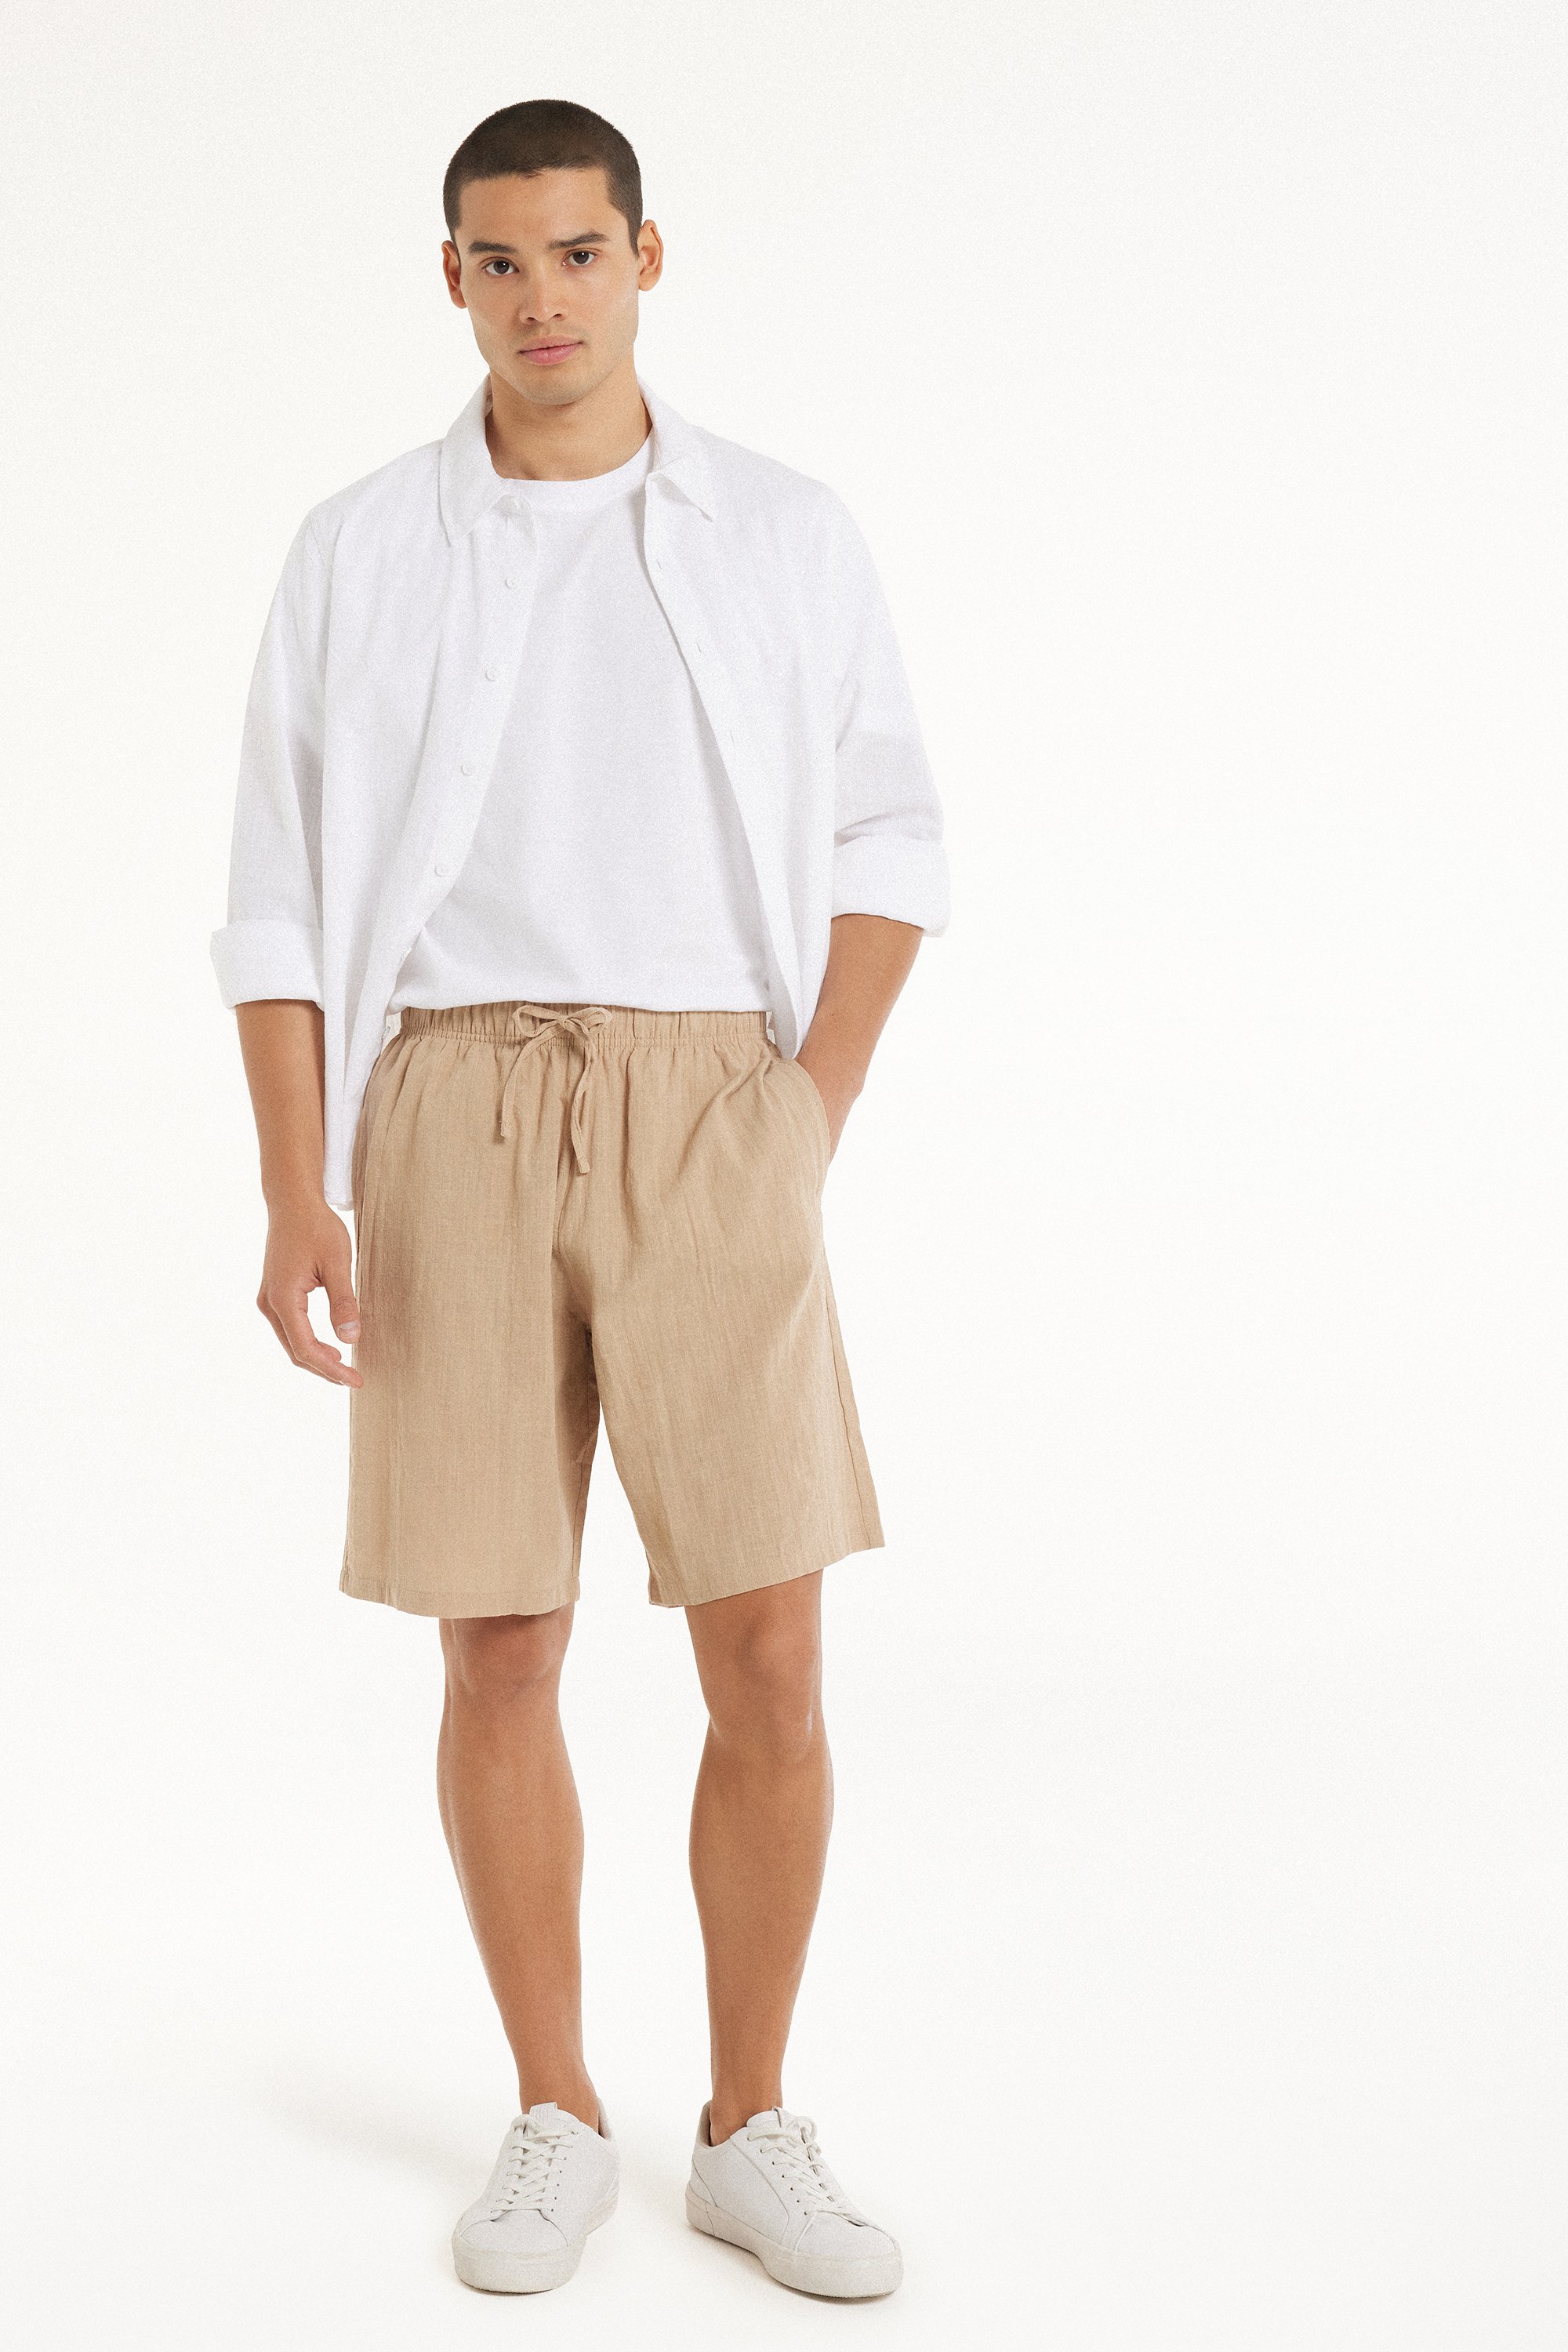 Pocket Shorts in 100% Super Light Cotton